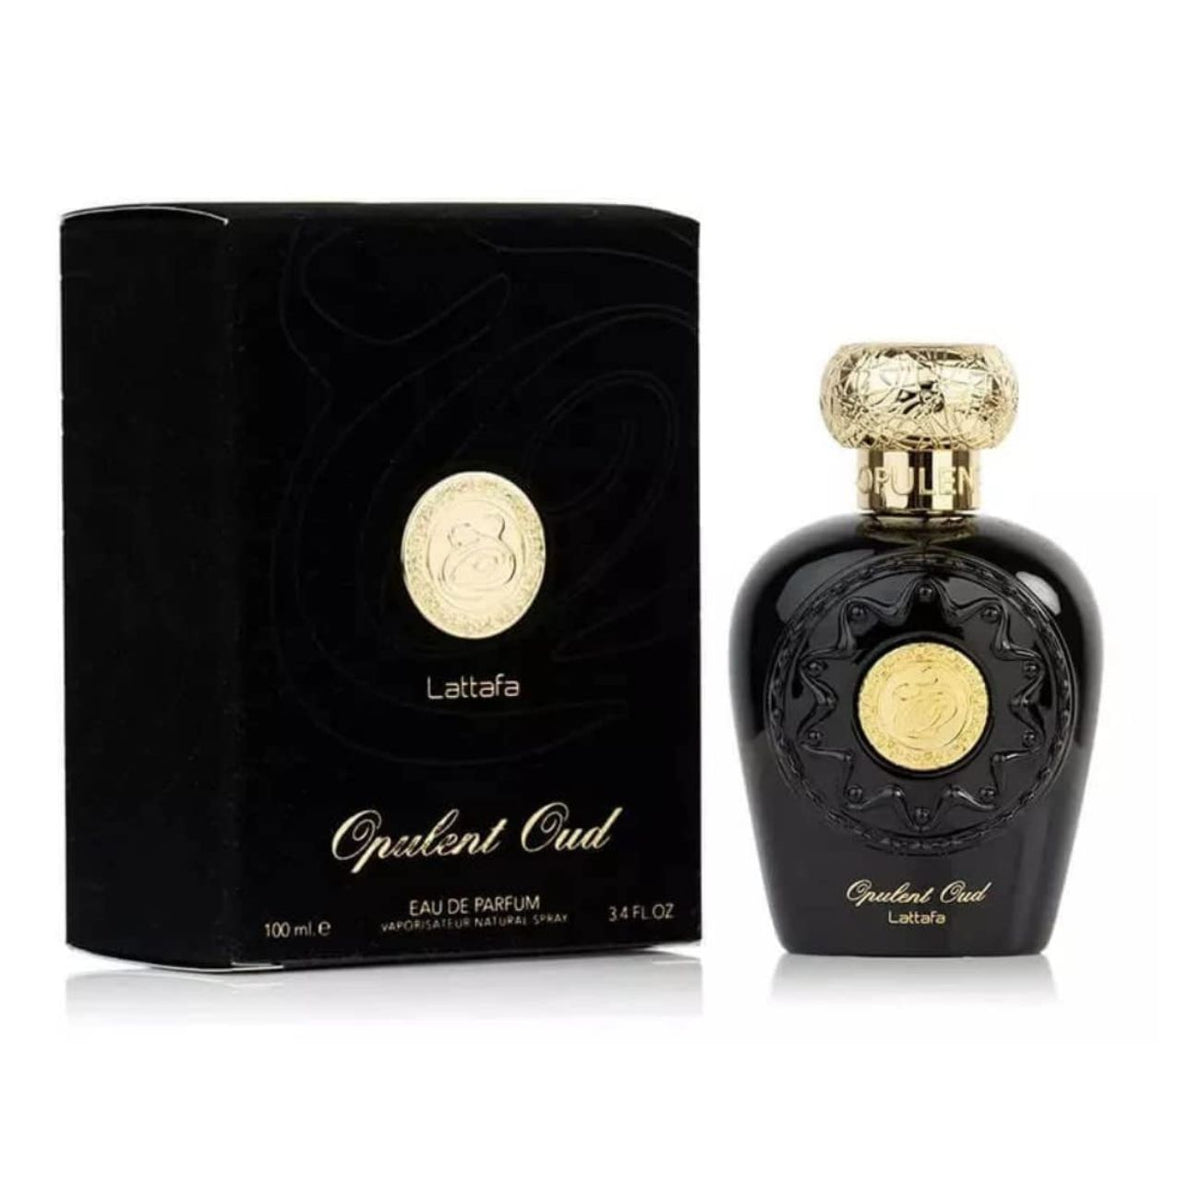 Perfume Unisex Lattafa Opulent oud Edp 100ml